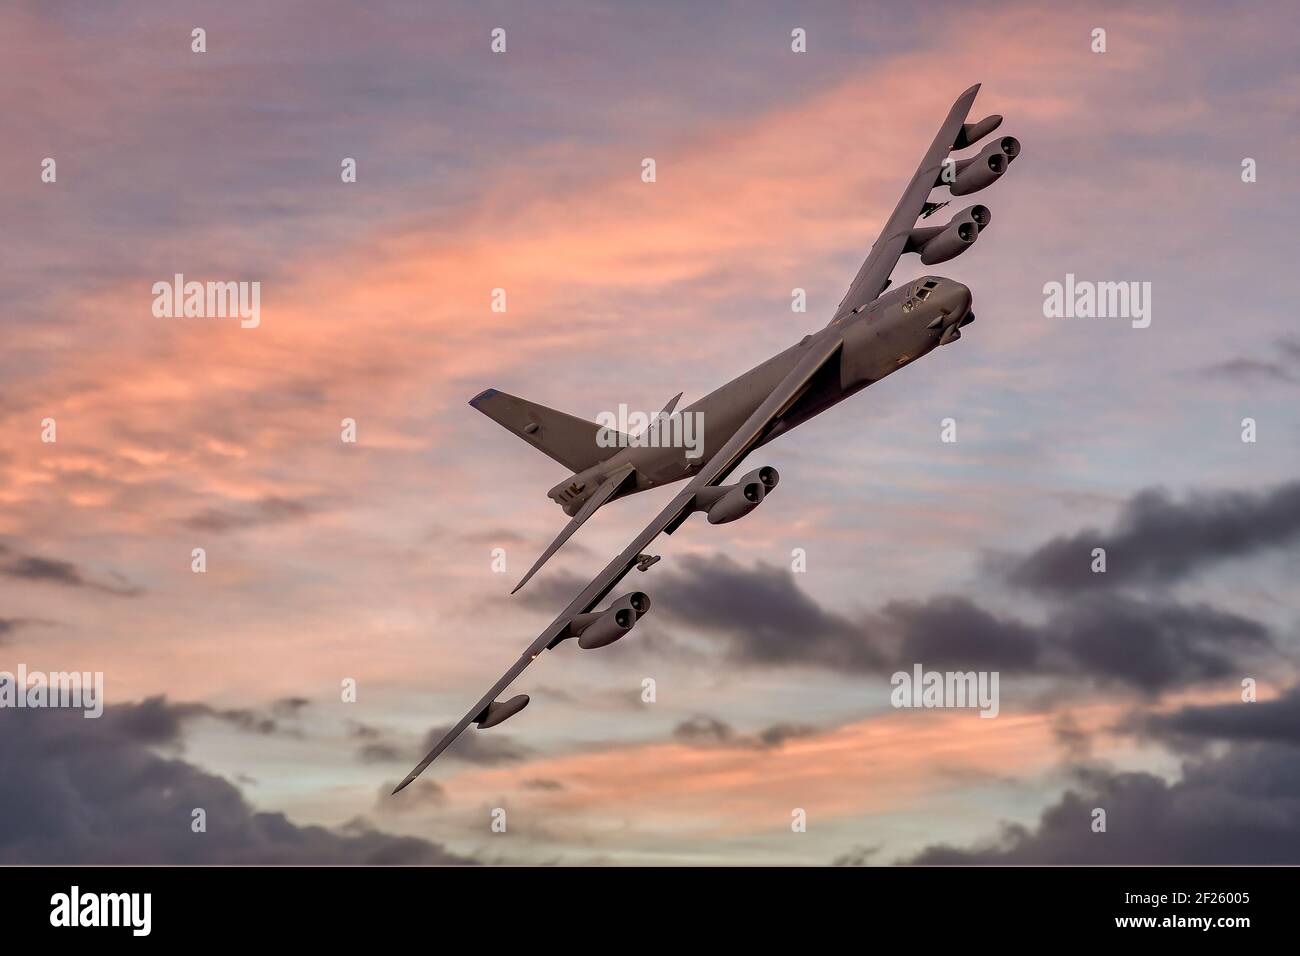 B52 schwerer Bomber stürzt sich bei Sonnenuntergang in Richtung Kamera. Boeing B-52 Acht-Antrieb Atombomber der US Air Force Stockfoto